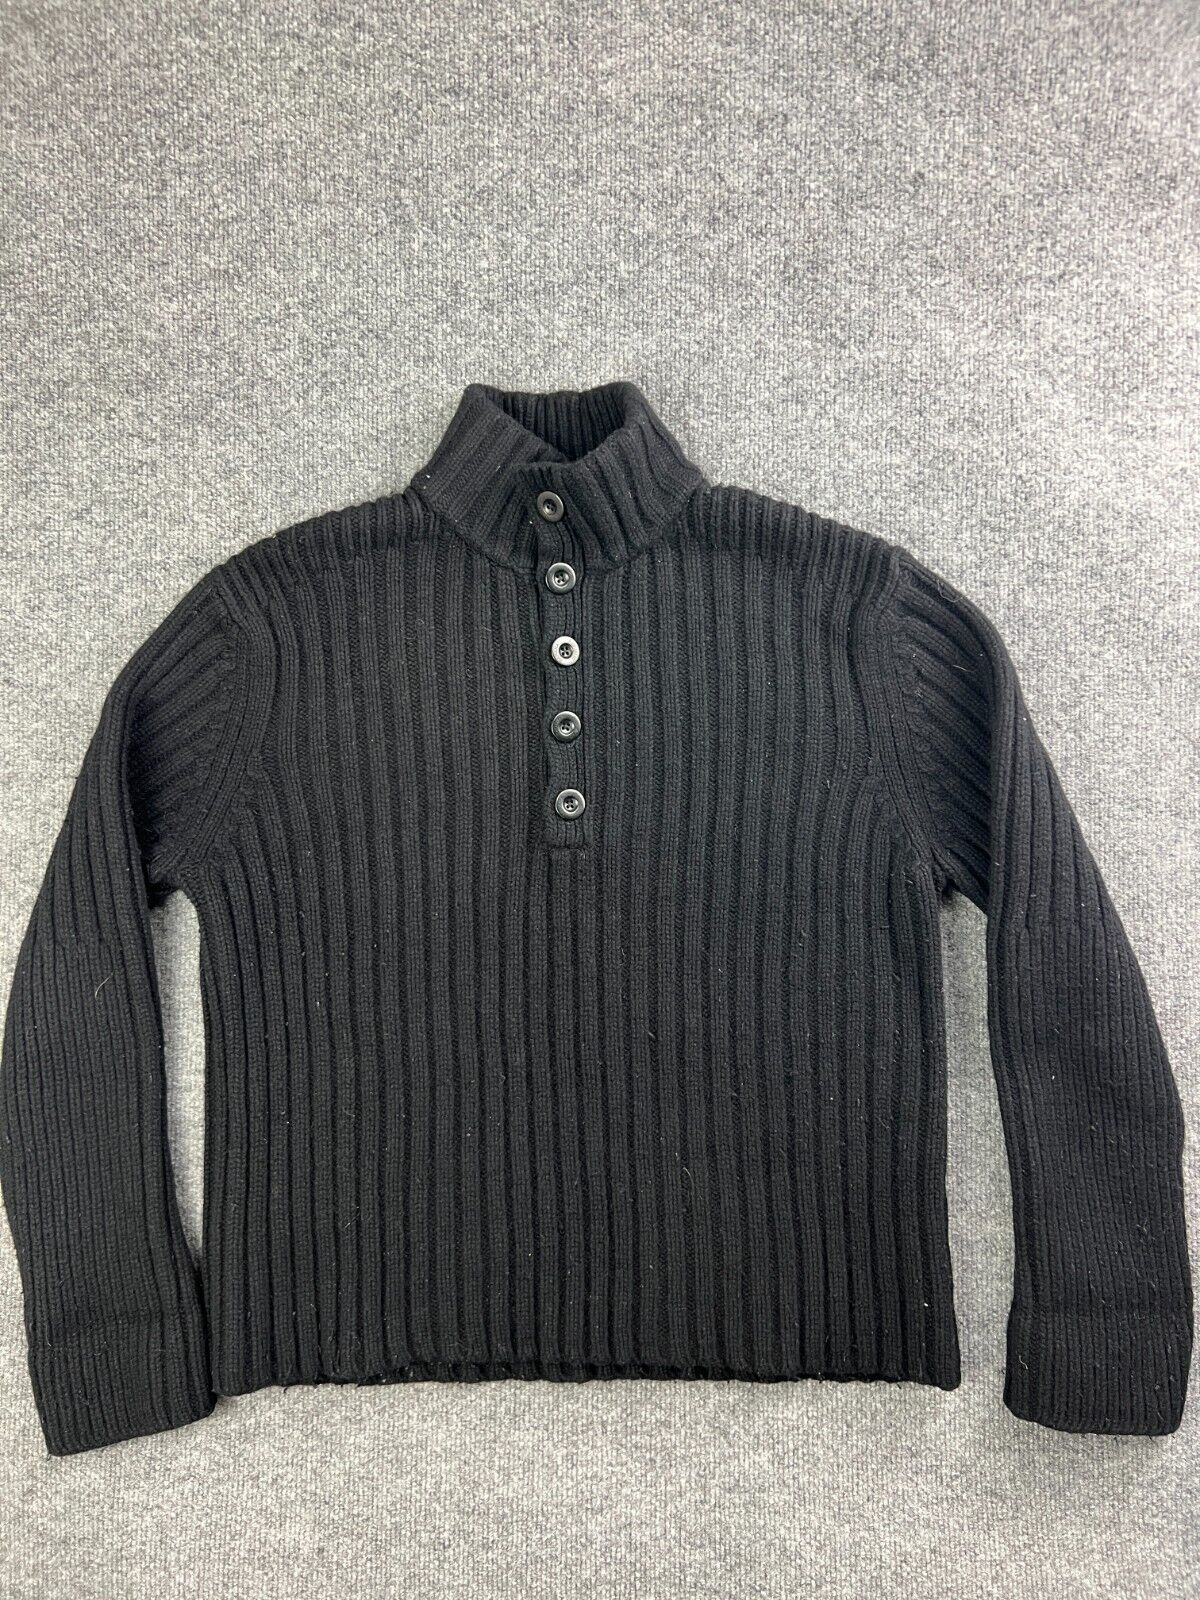 Vintage Banana Republic Lambswool Cashmere Sweater Men's XL Black Mock Buttons